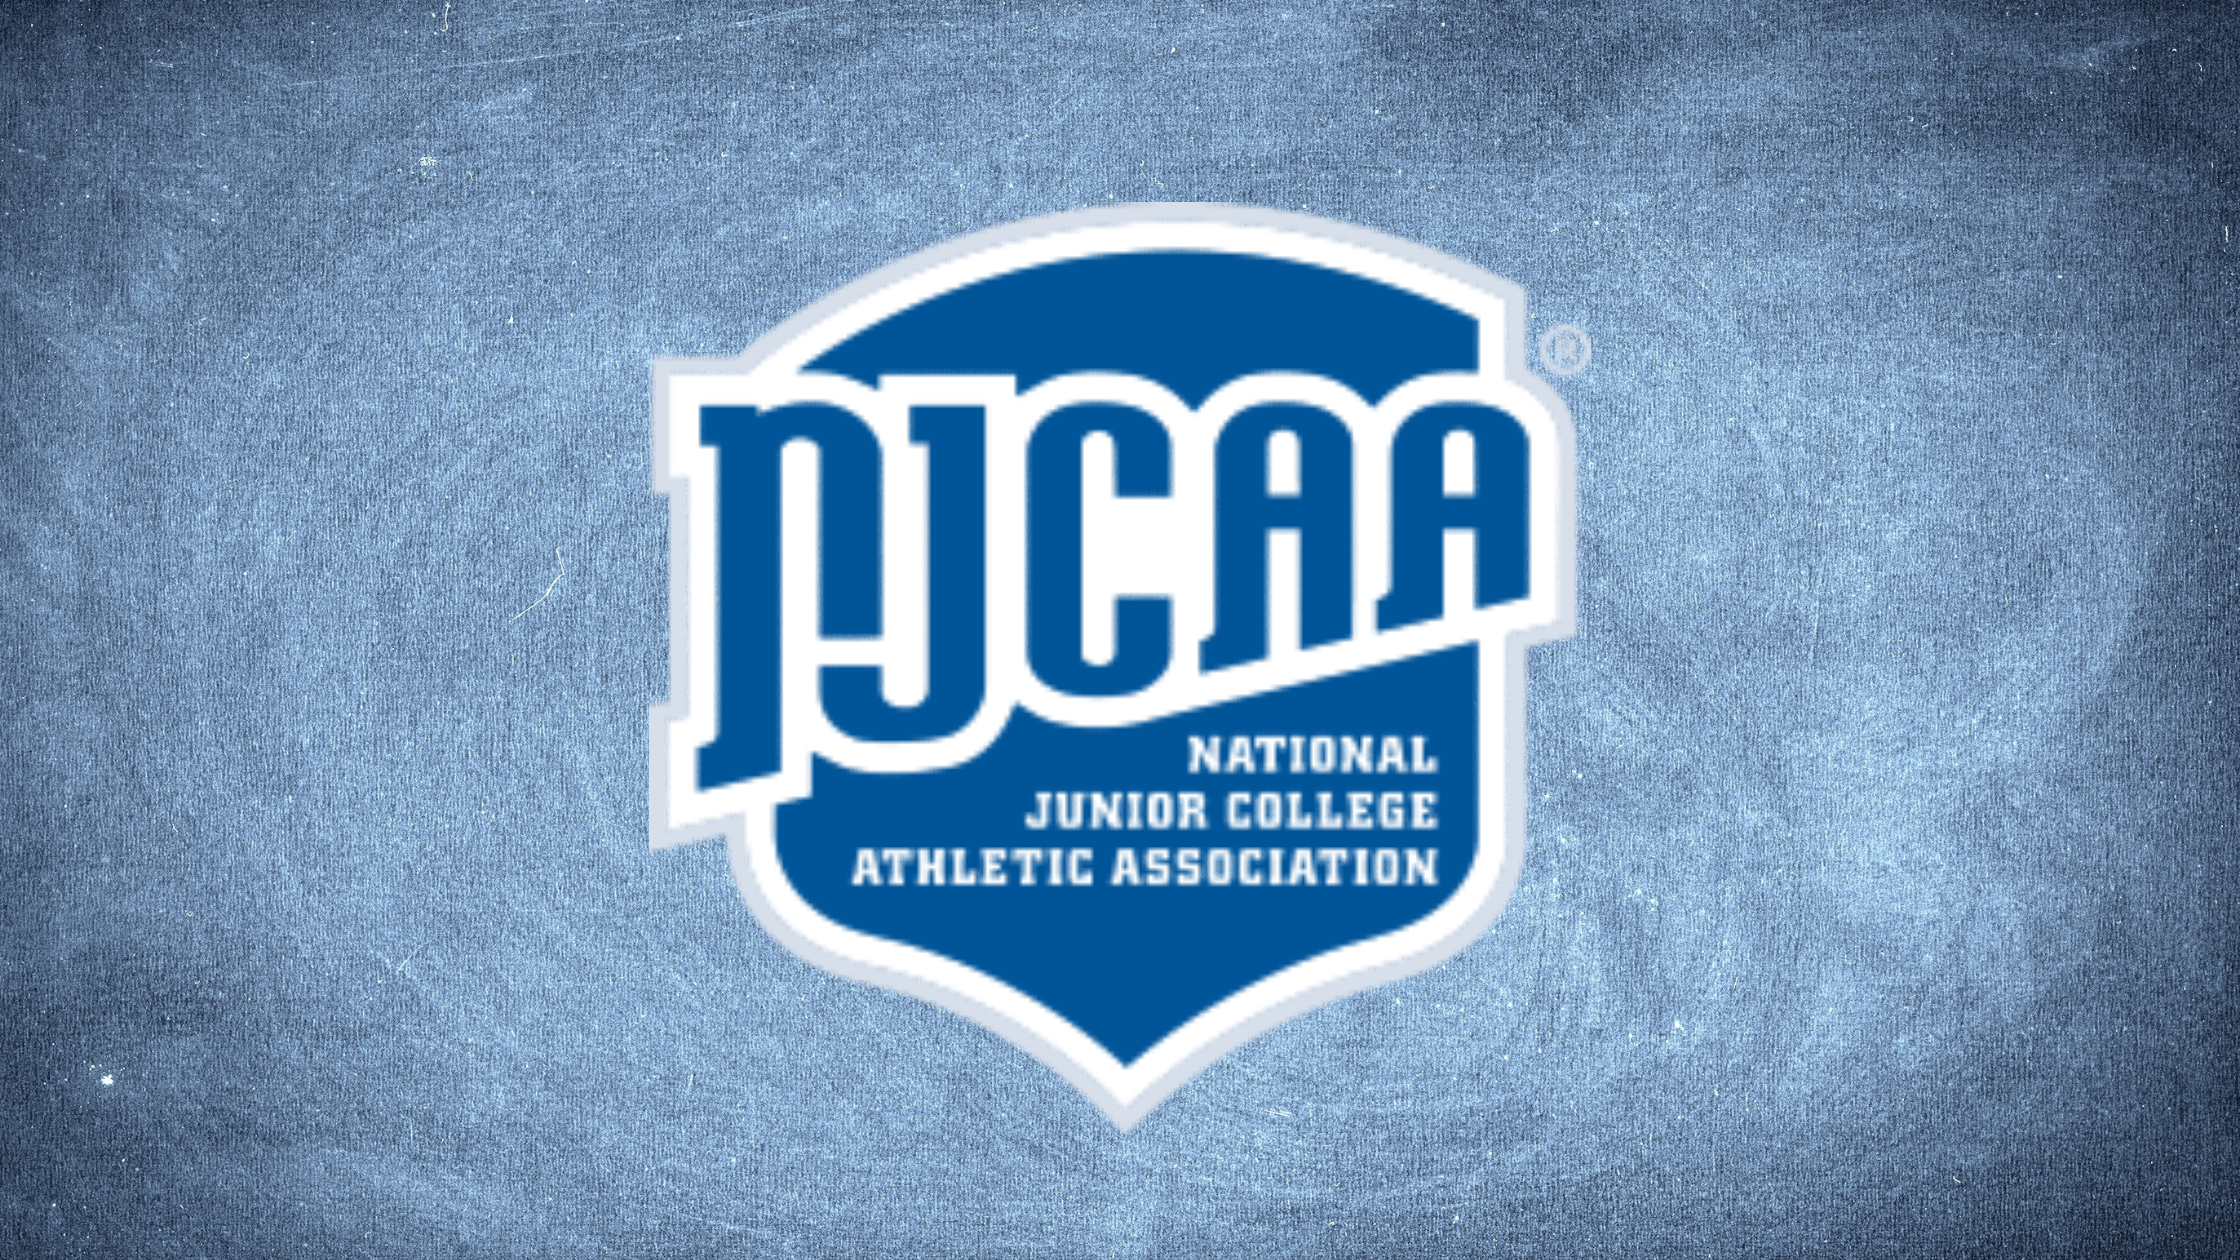 National junior college athletic association logo